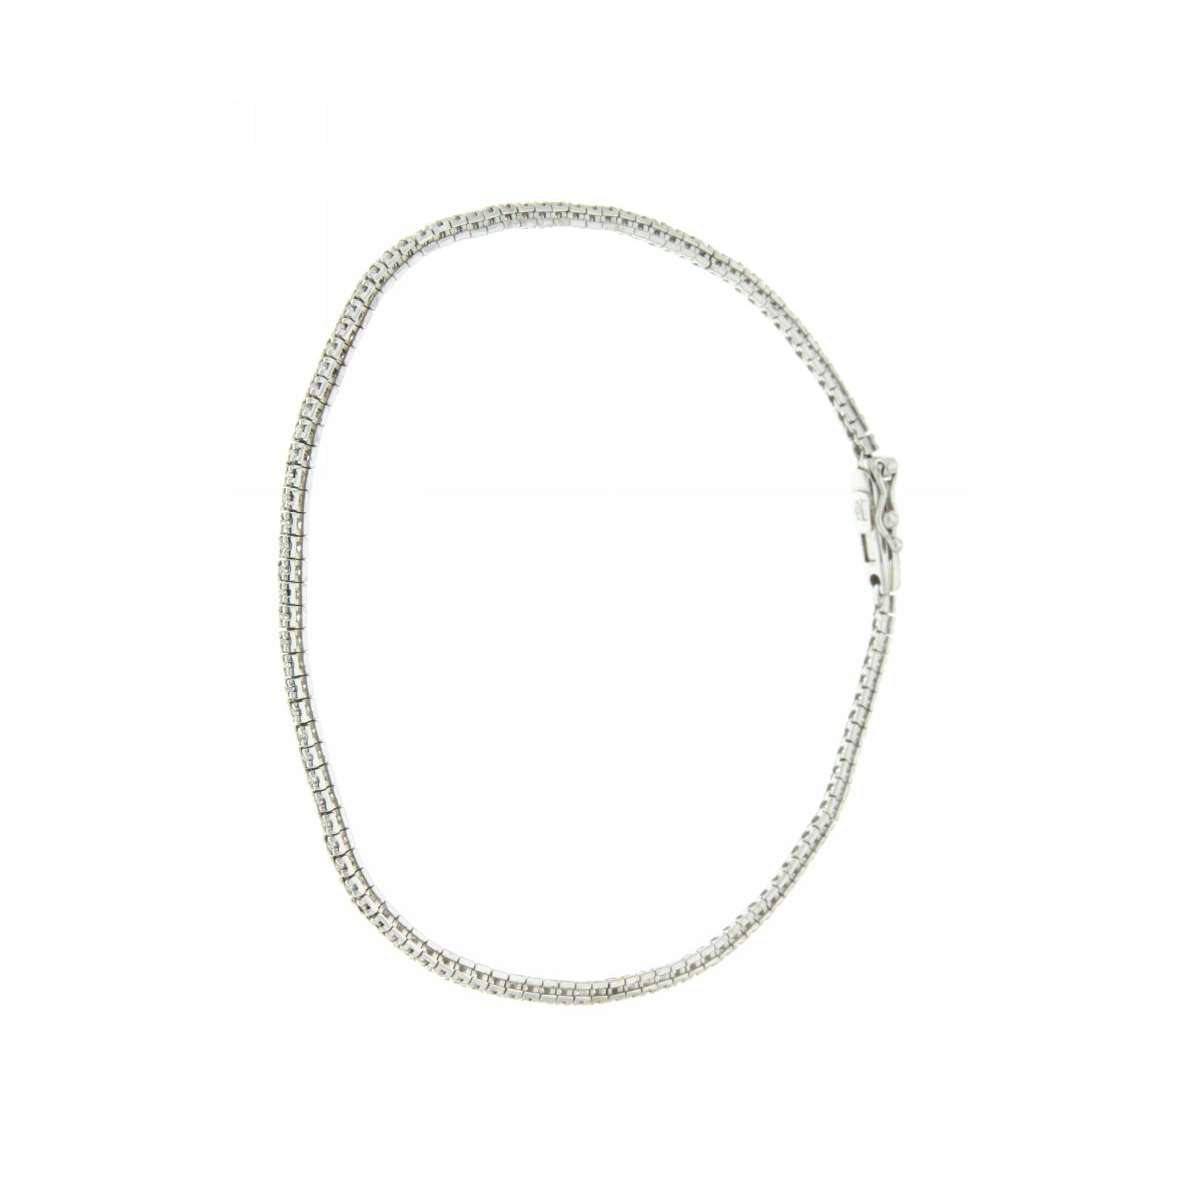 Tennis bracelet 0.59 carats diamonds G-VVS1